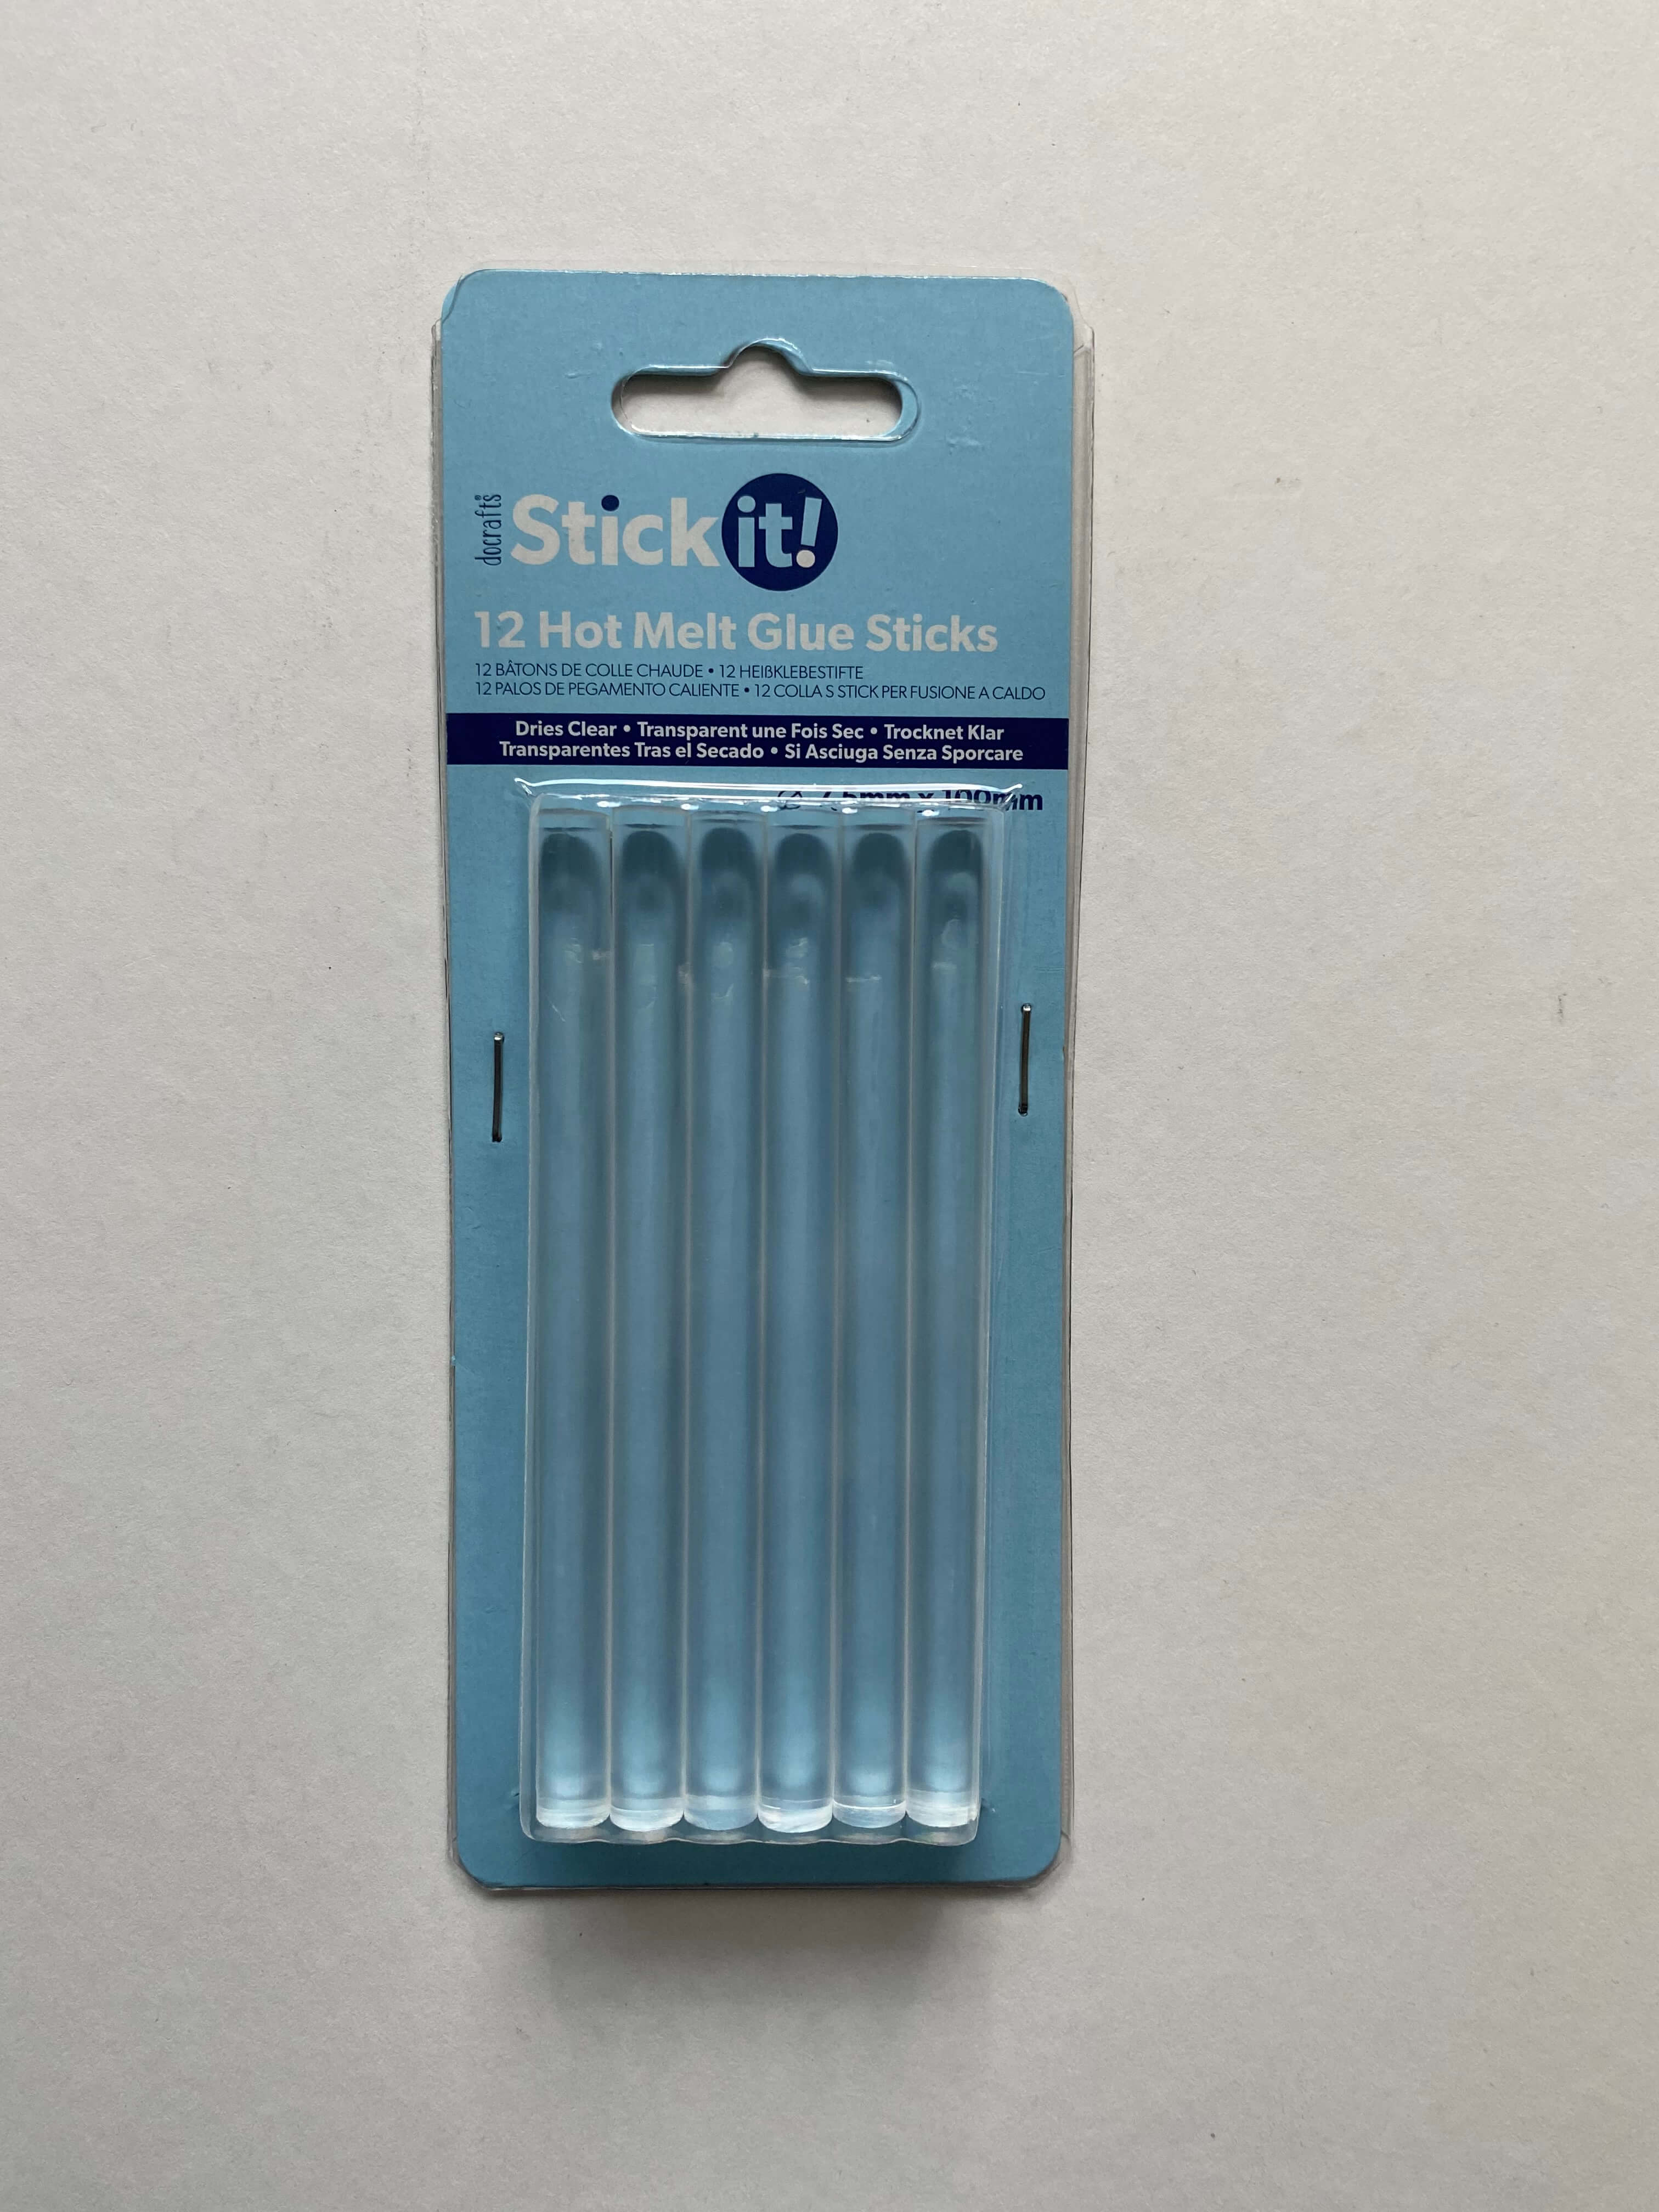 StickIt! 12mm x 12 Hot Melt Clear Glue Sticks 